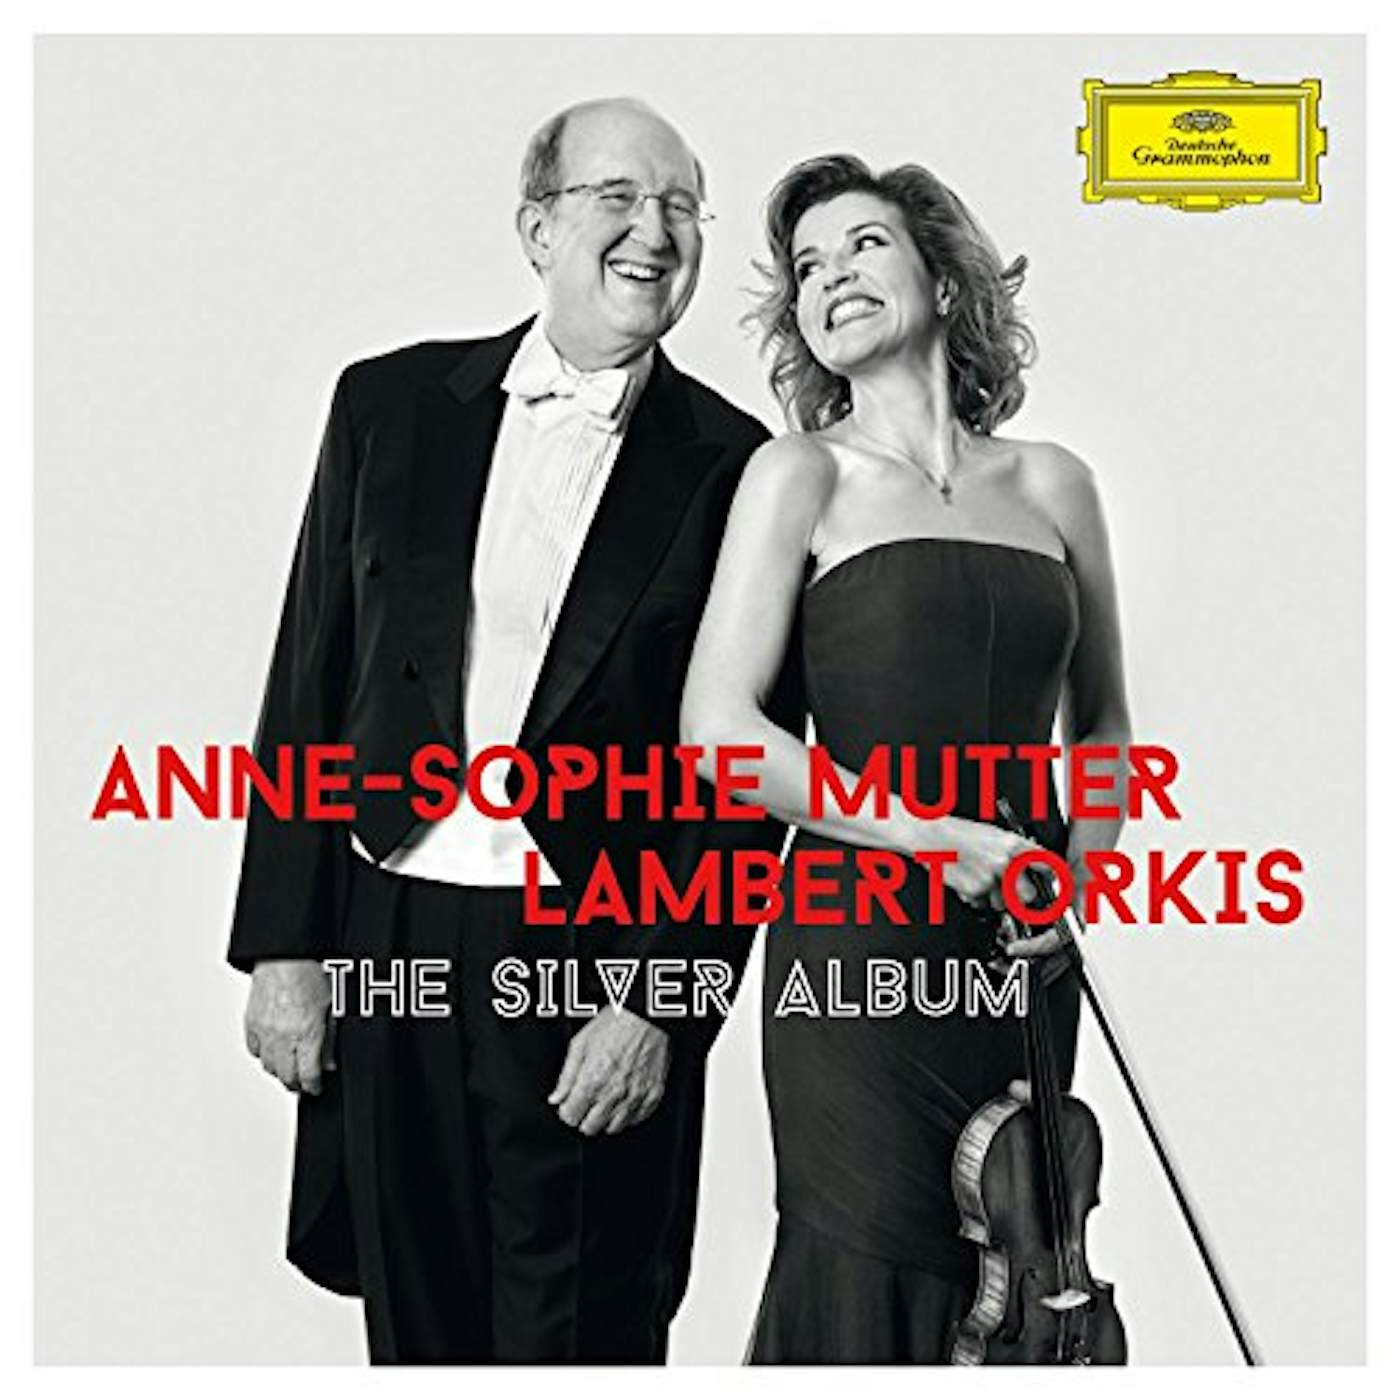 Anne-Sophie Mutter SILVER ALBUM CD